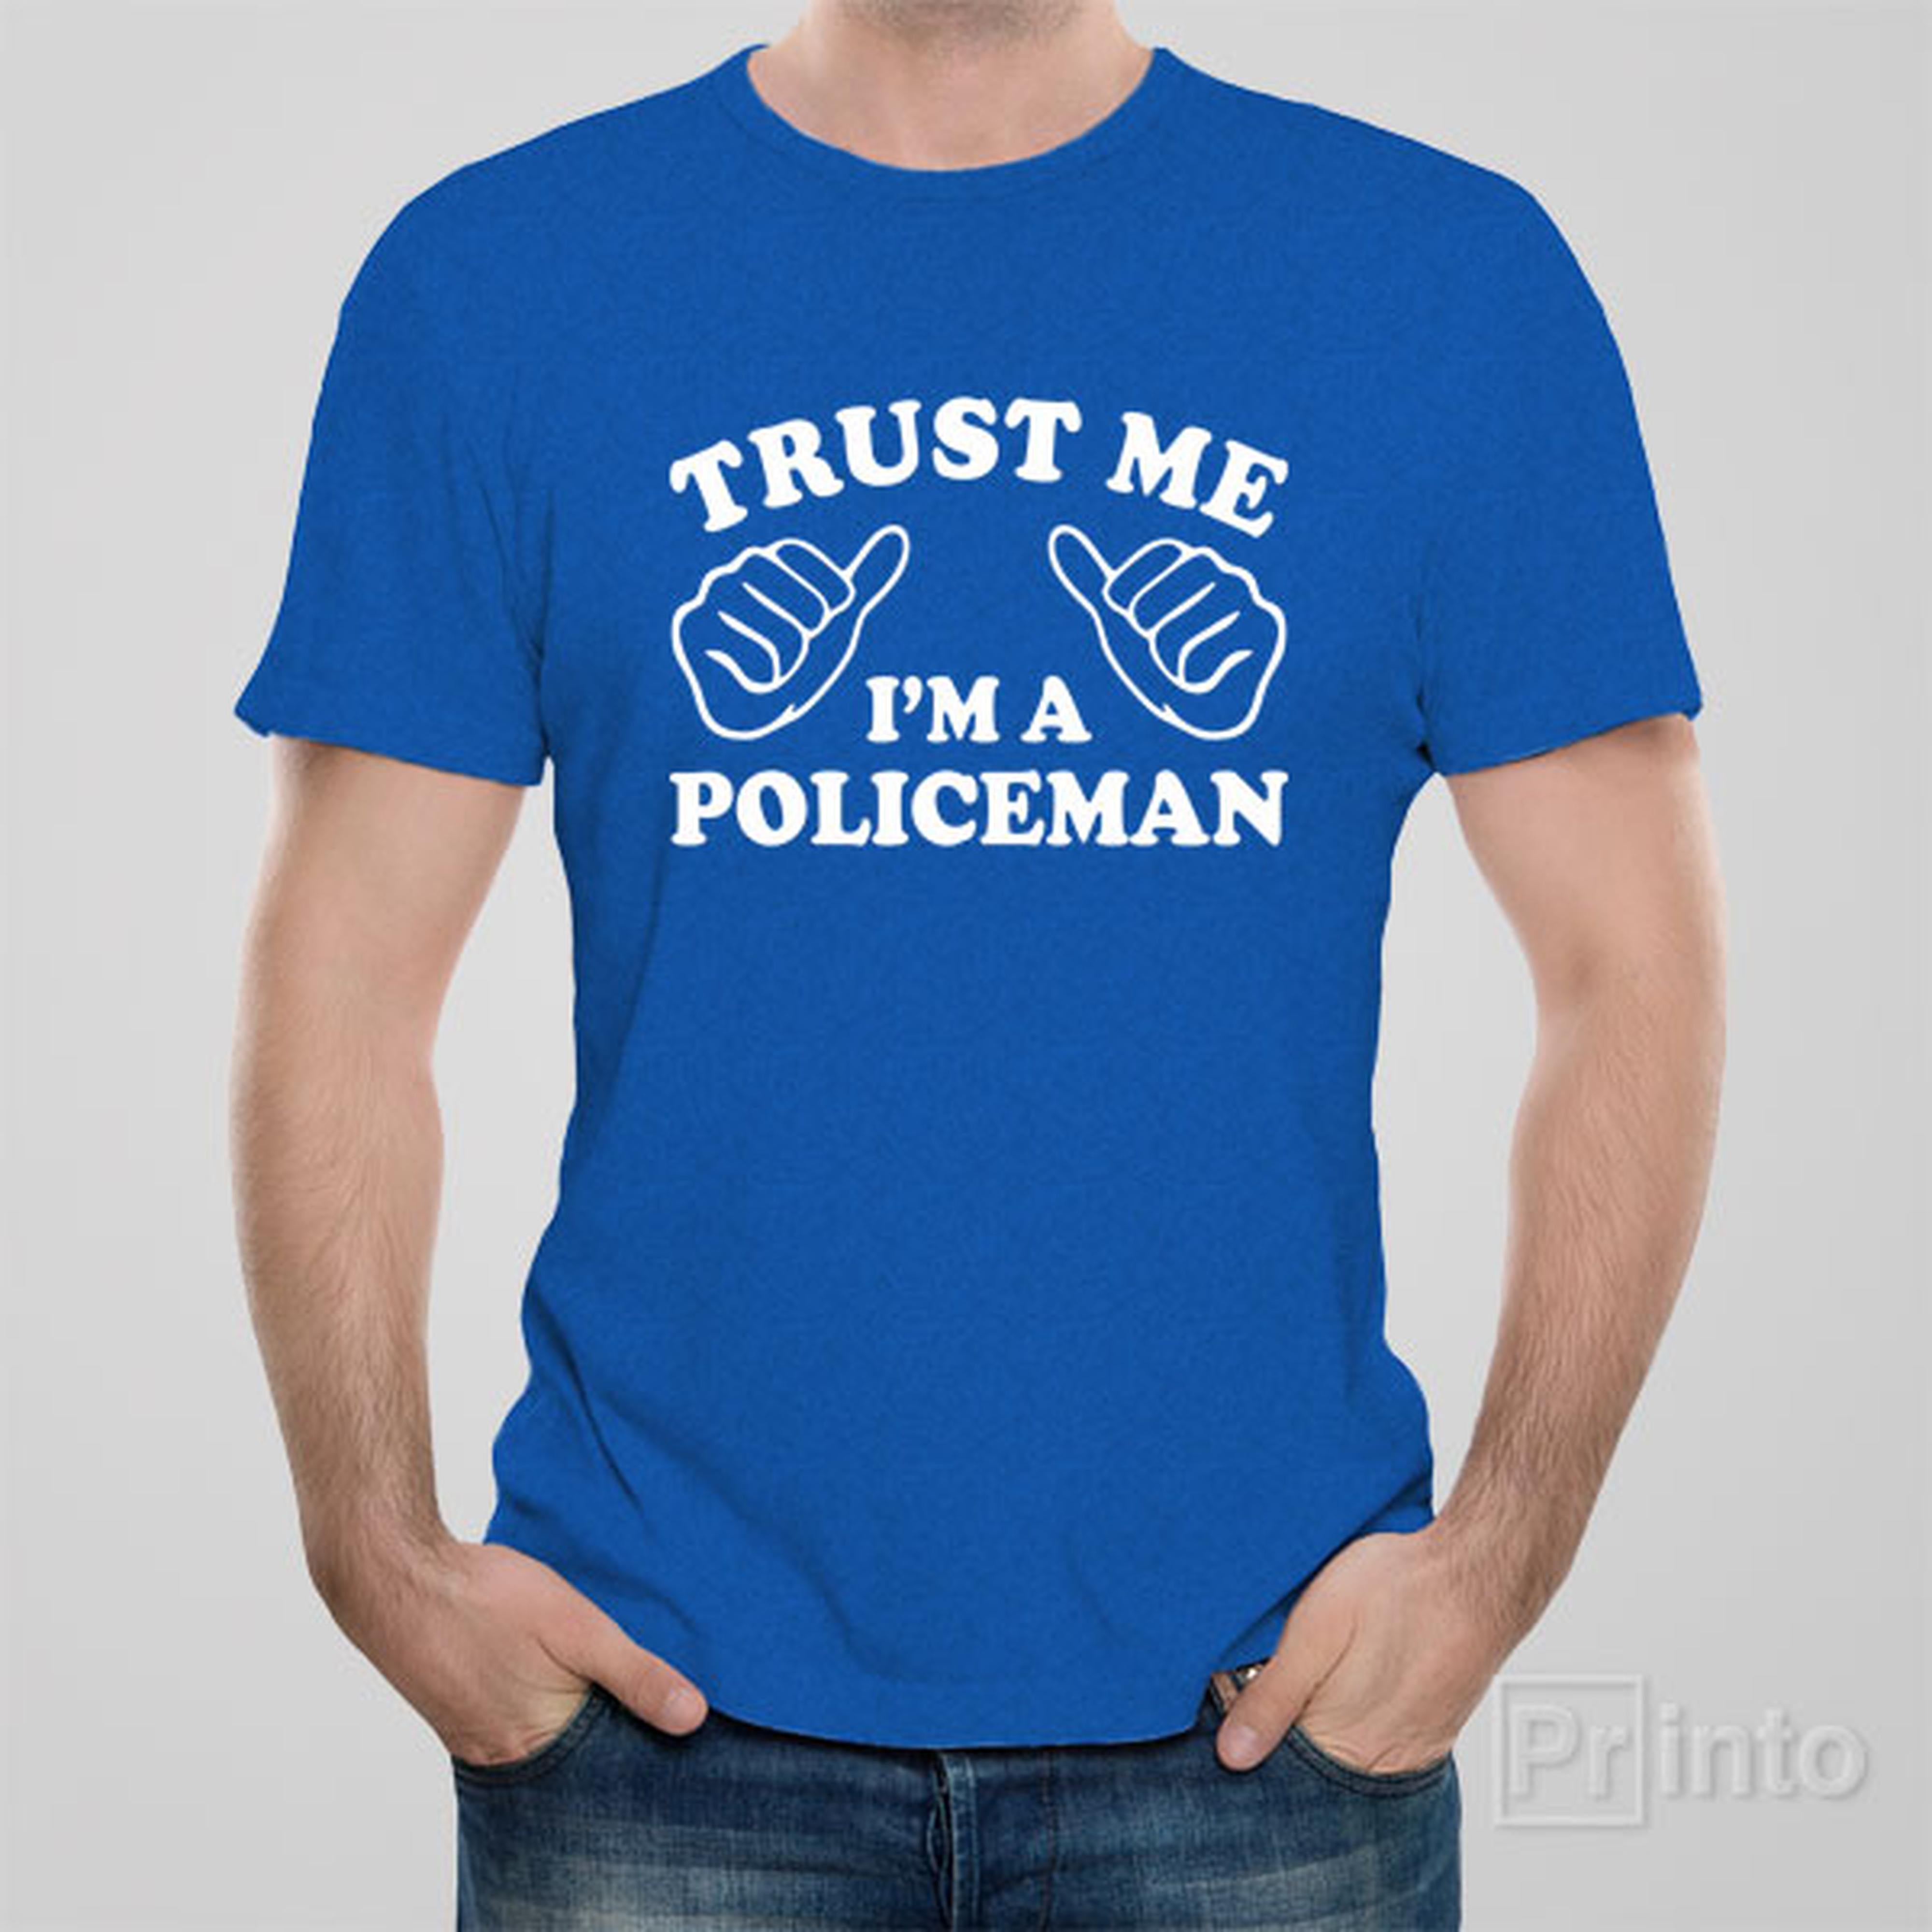 trust-me-i-am-a-policeman-t-shirt